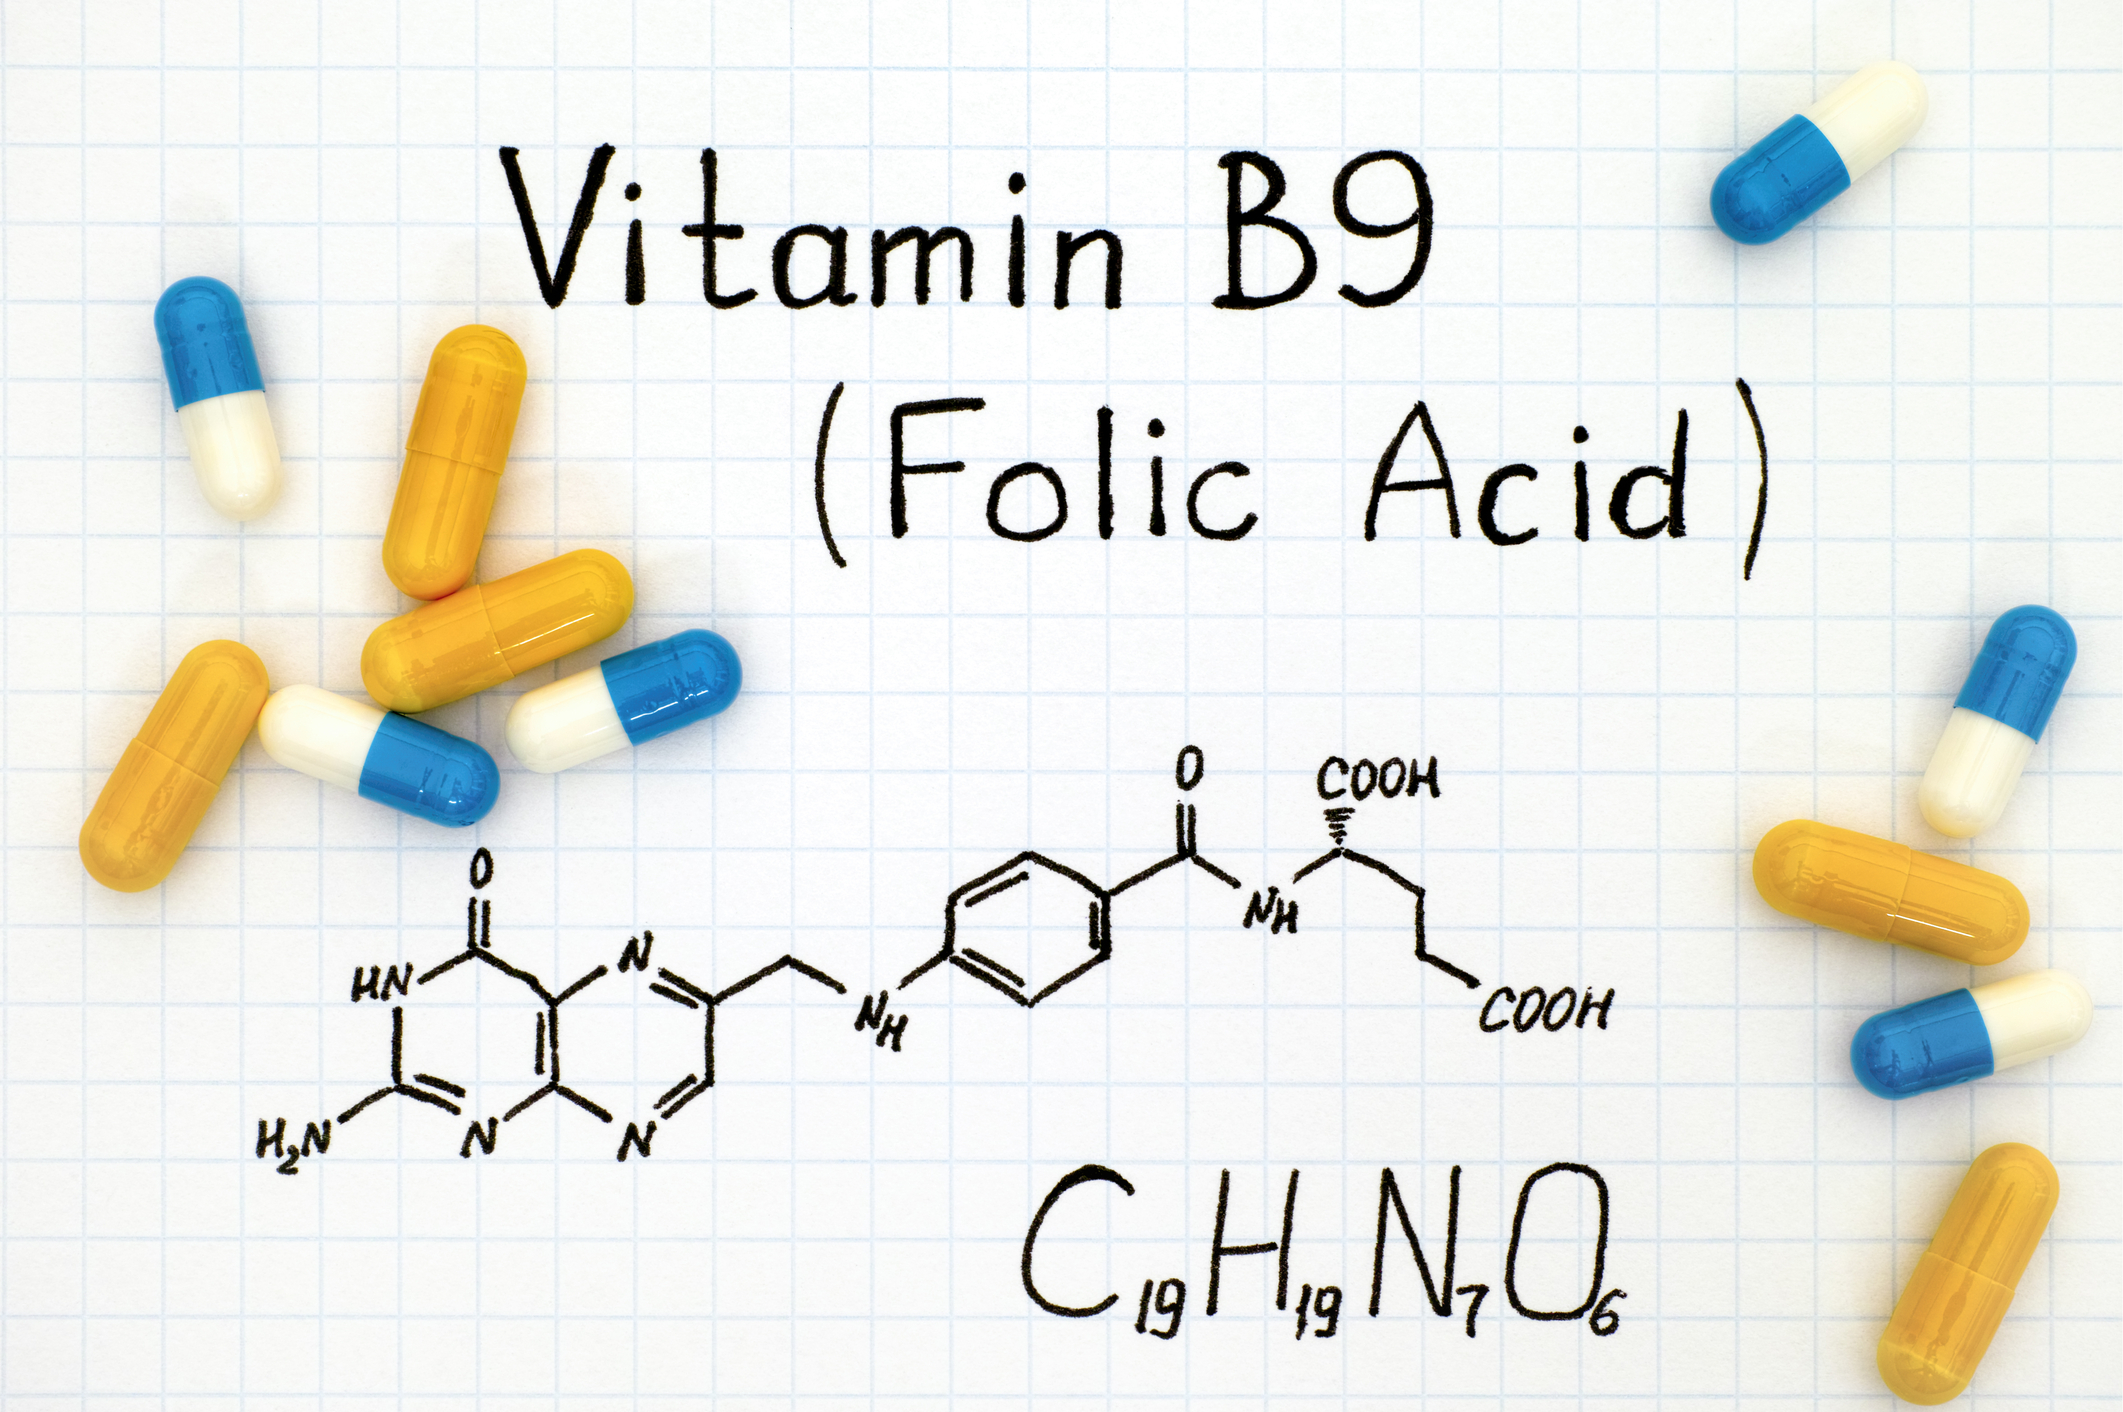 What is folic acid?